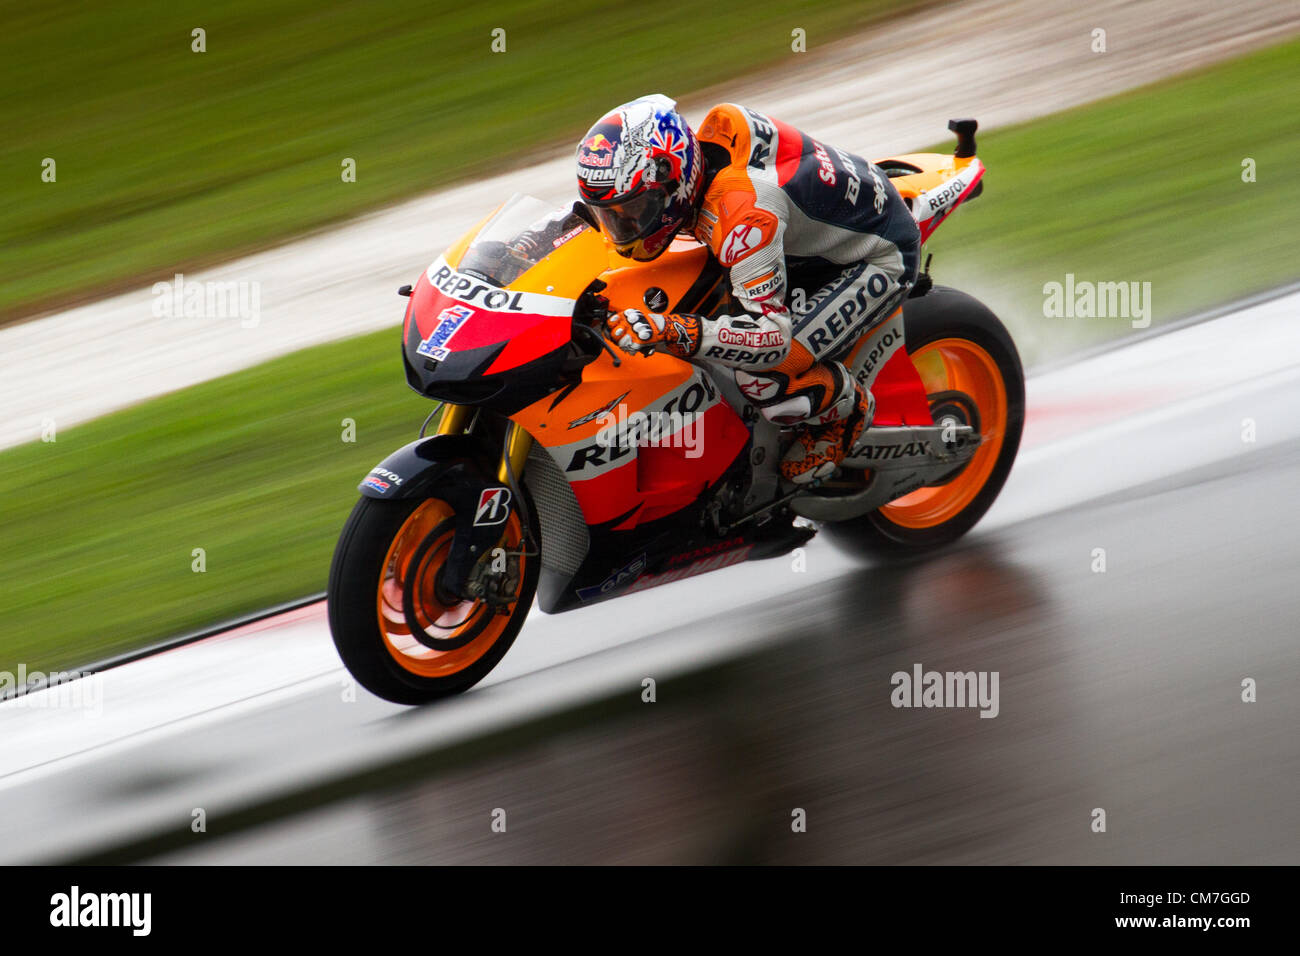 Sepang International Circuit (SIC), Malaysia, Oct 21, 2012. MotoGP rider  Casey STONER during the 2012 Malaysian Motorcycle Grand Prix Stock Photo -  Alamy